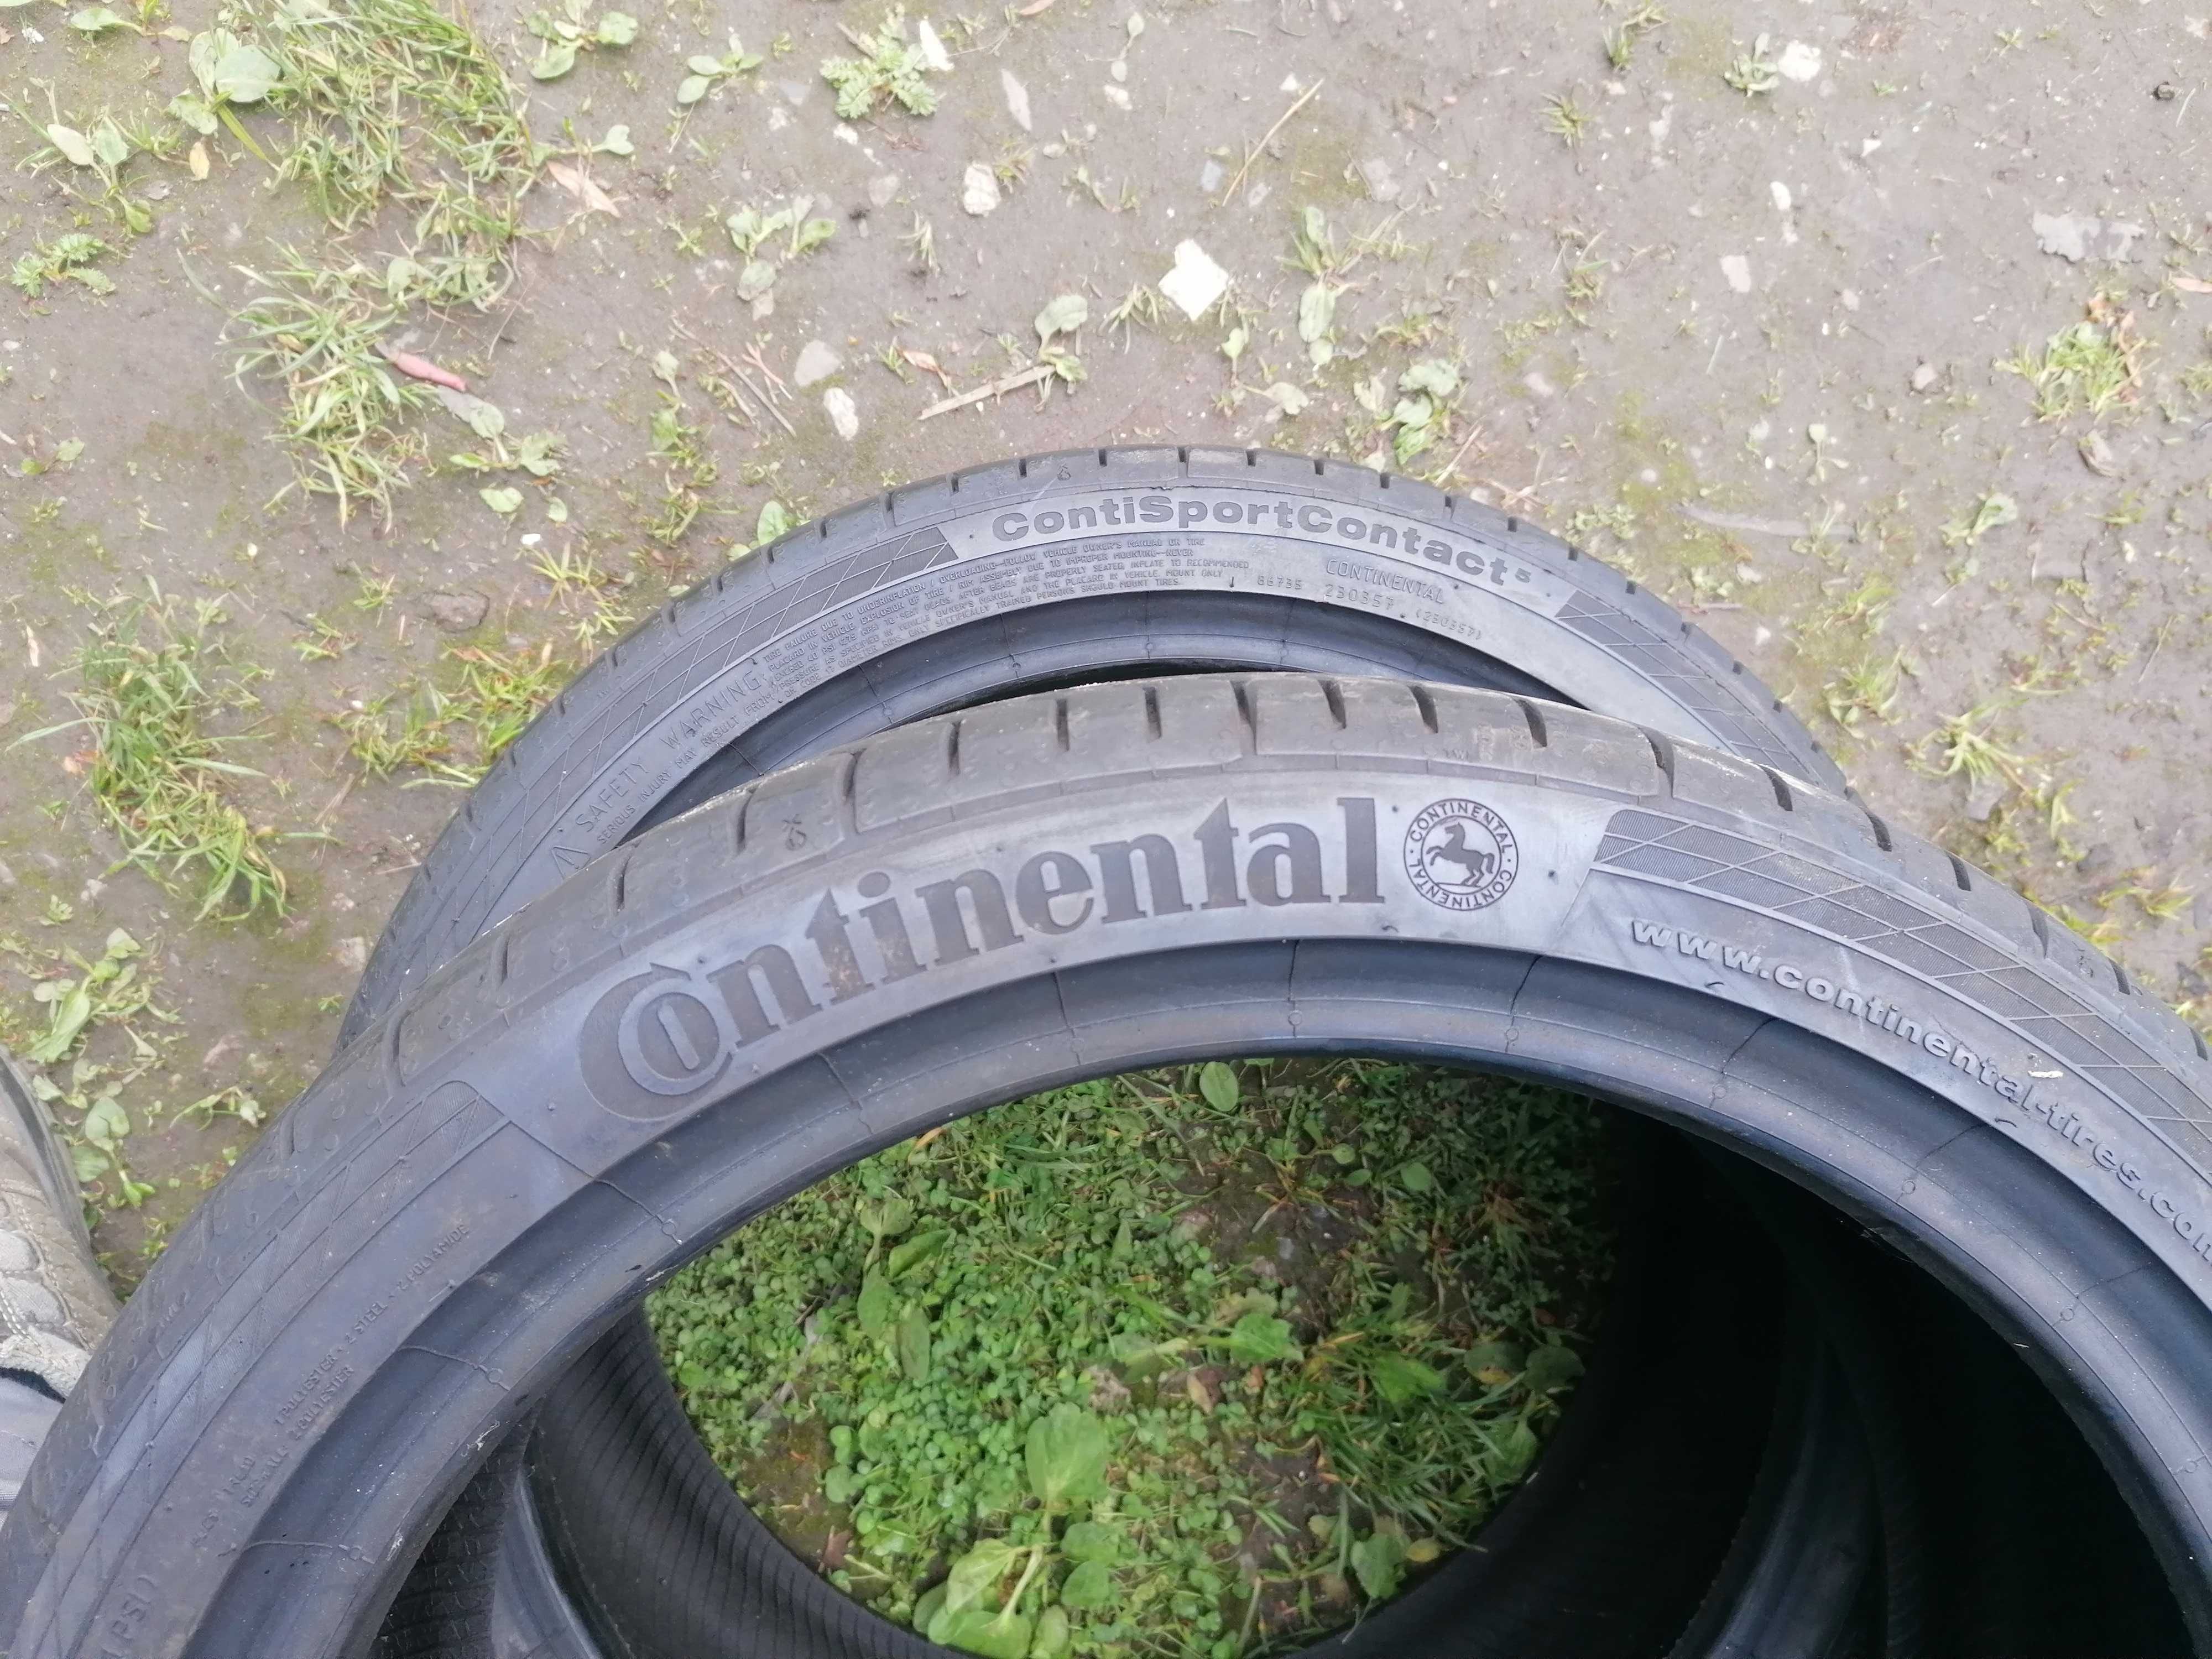 Opony 205/40/17 Continental Dunlop Koncho z rantem Ochronnym